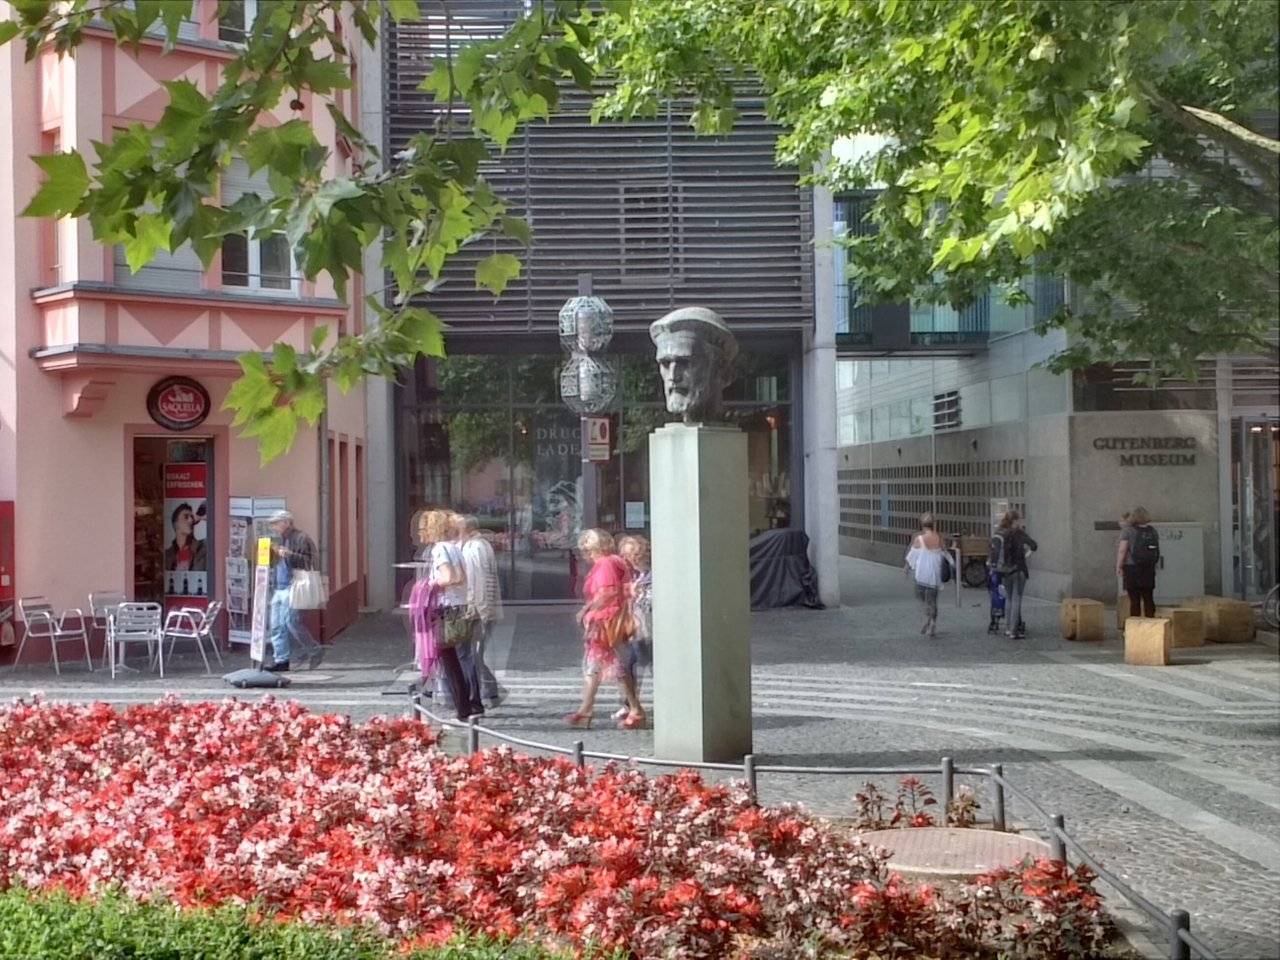 Bust of Johannes Gutenberg with Gutenberg Museum in background